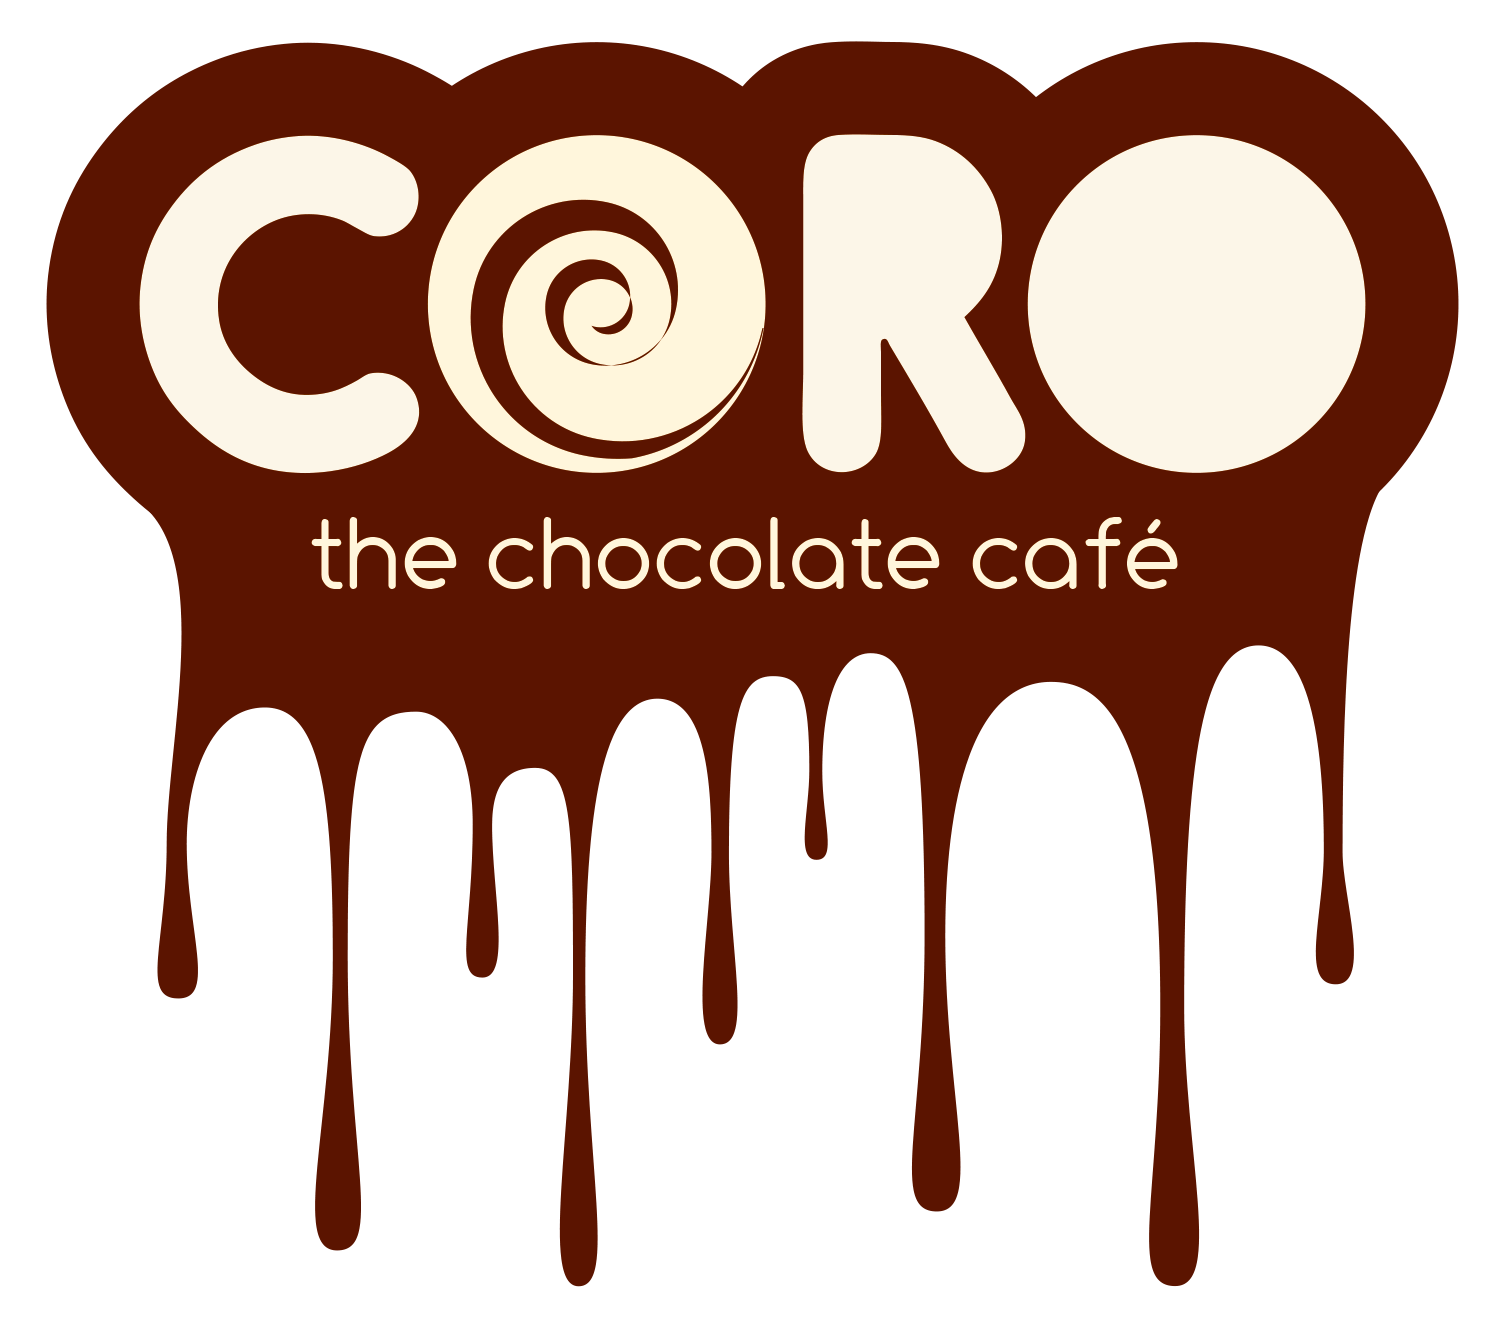 Chocolate Logo - Coro the Chocolate Cafe. Chocolate Cafe Edinburgh